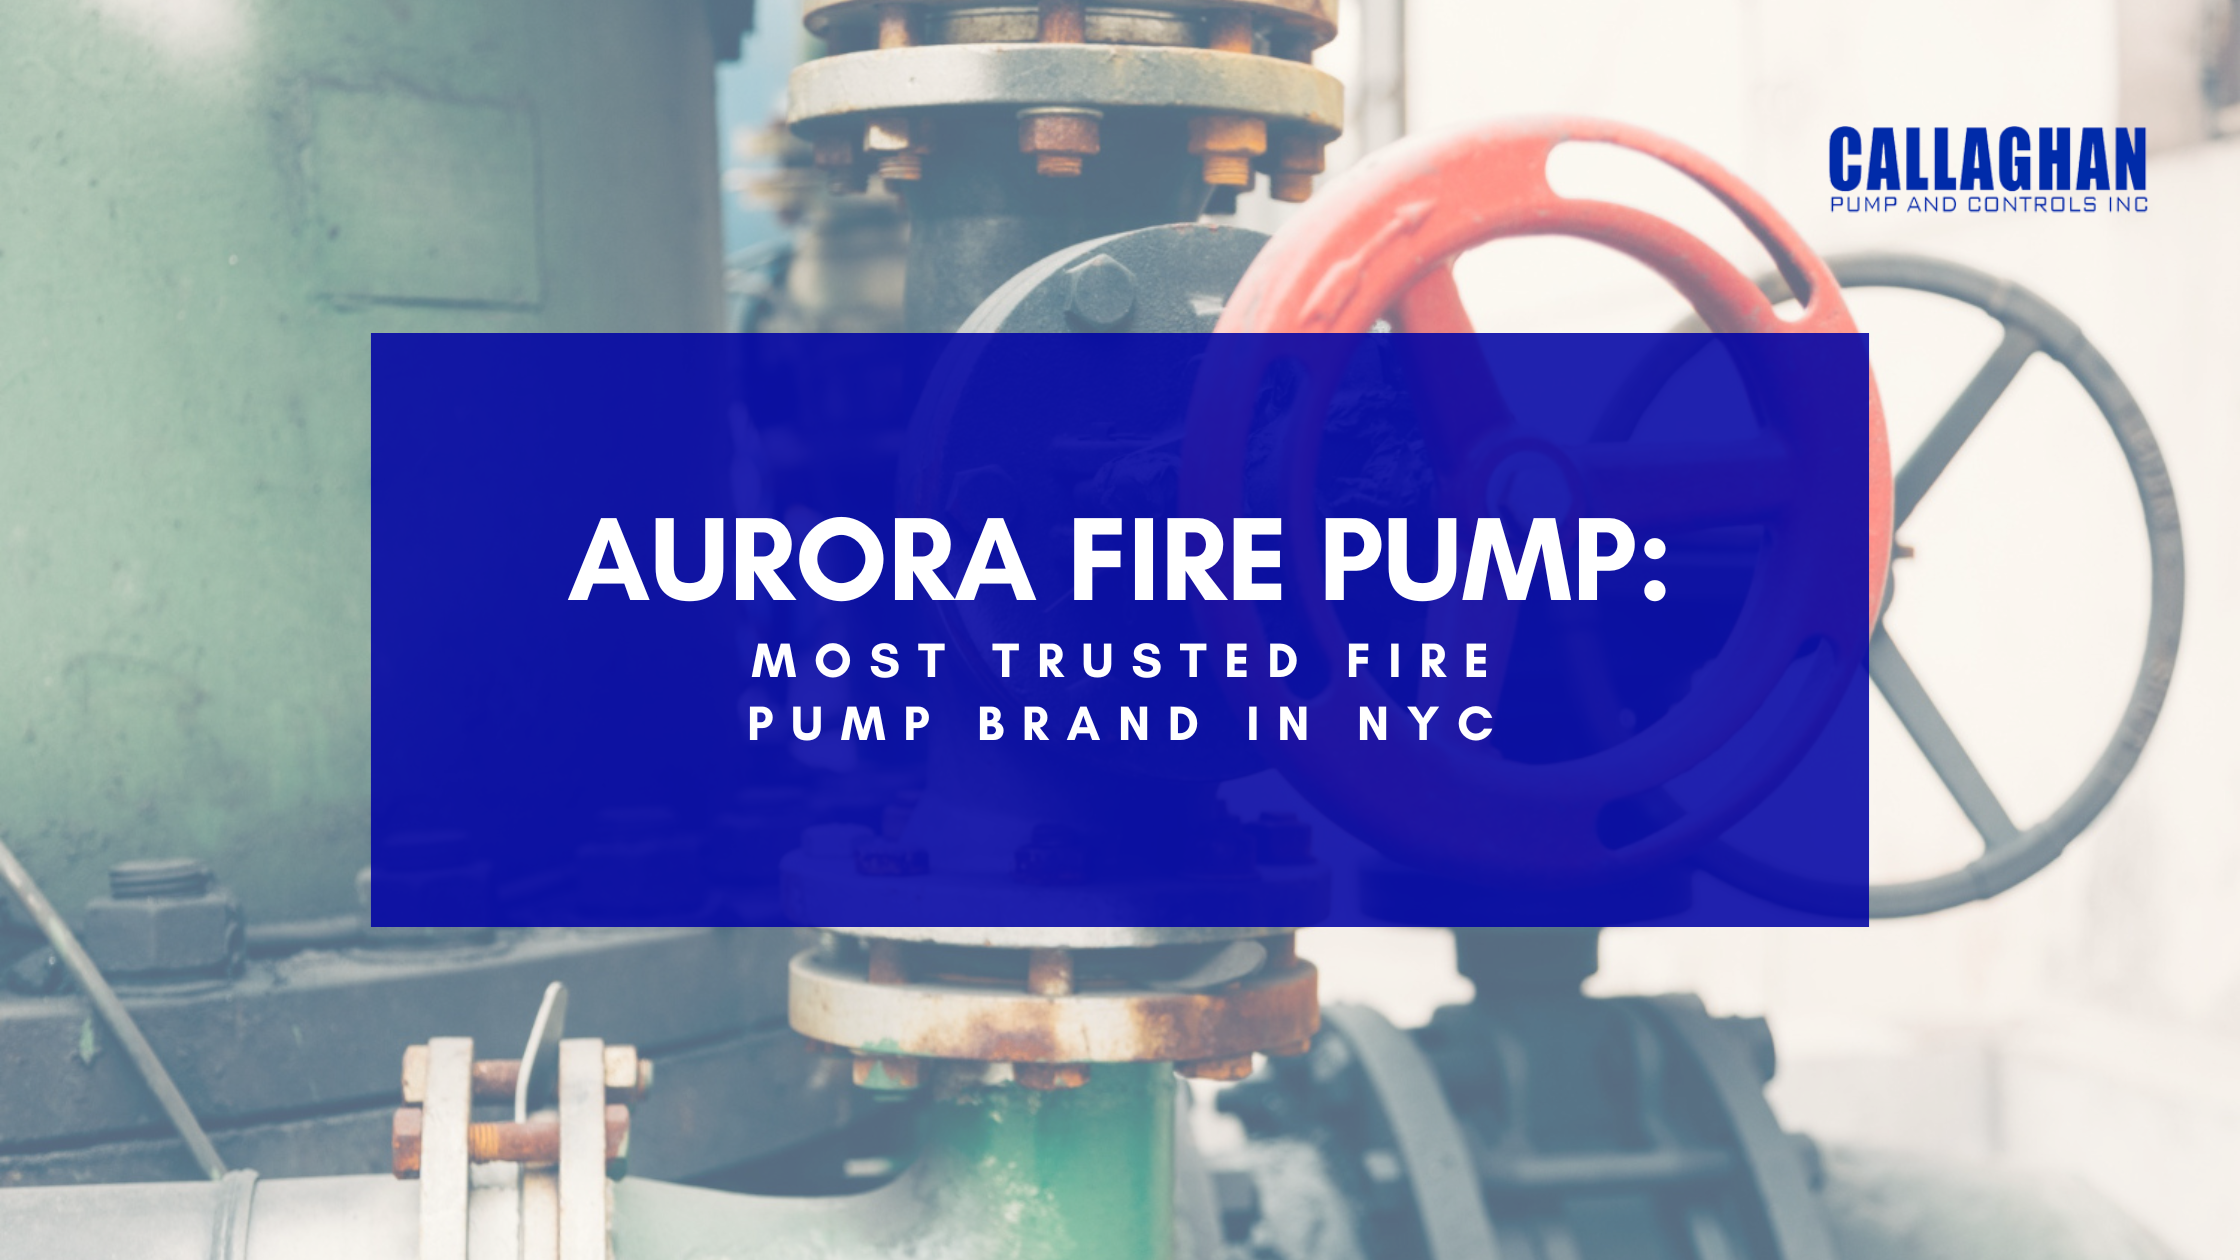 Aurora Fire Pump: Most Trusted Fire Pump Brand in NYC